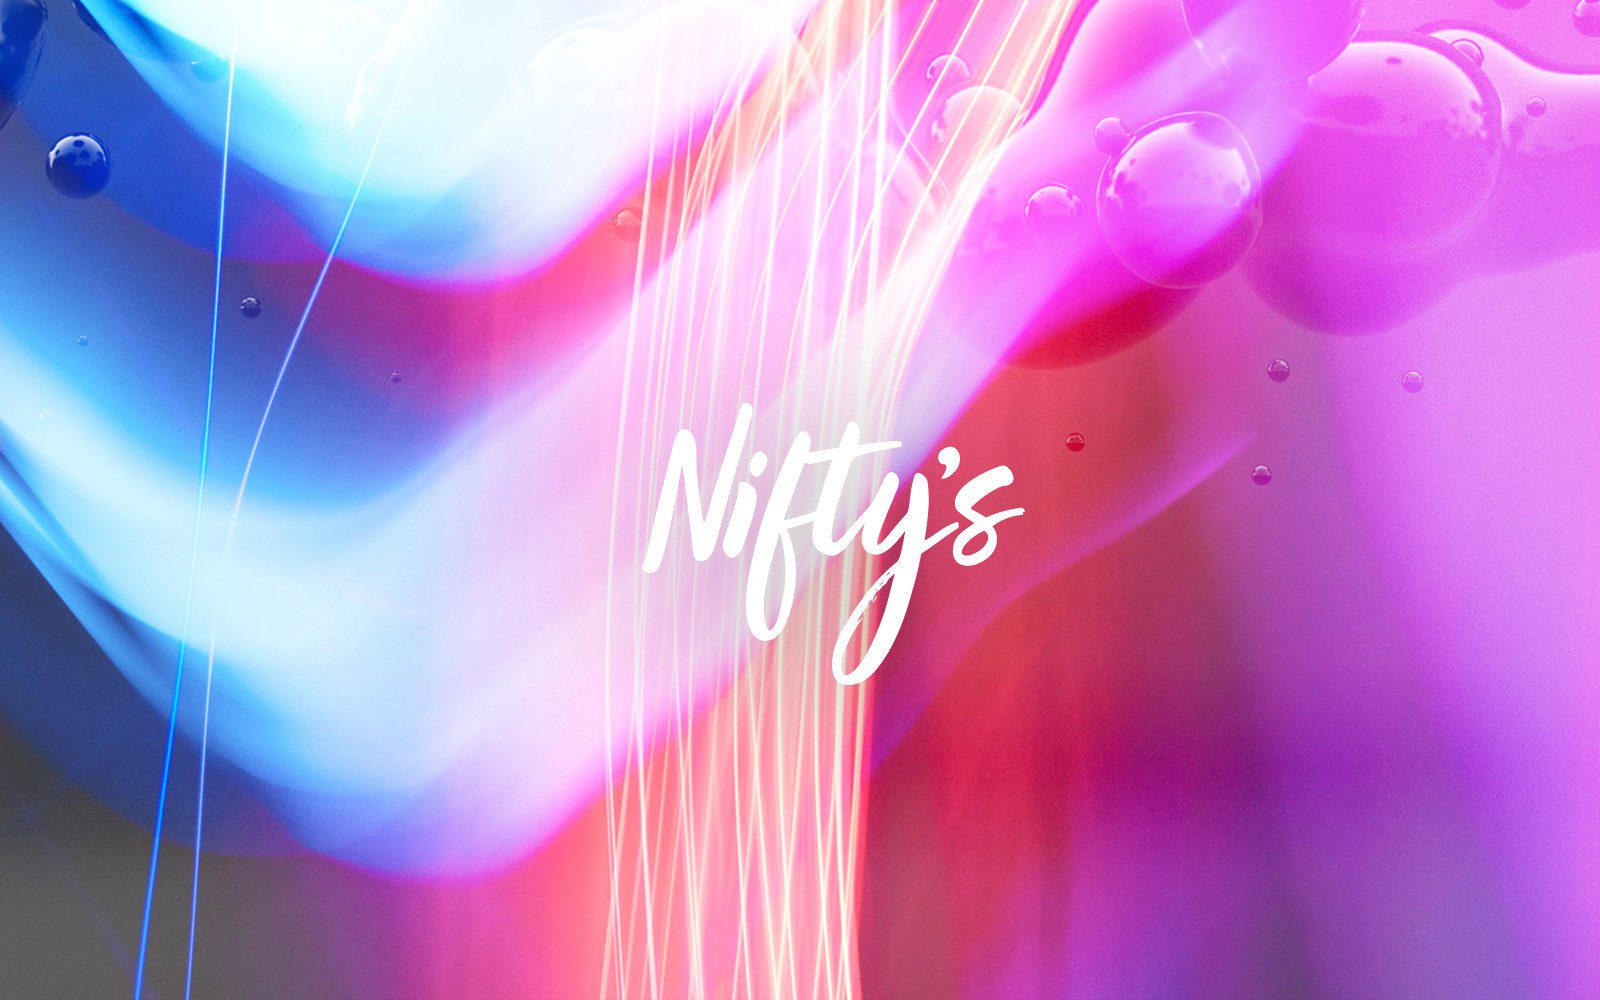 Niftys-NFT-Social-Network